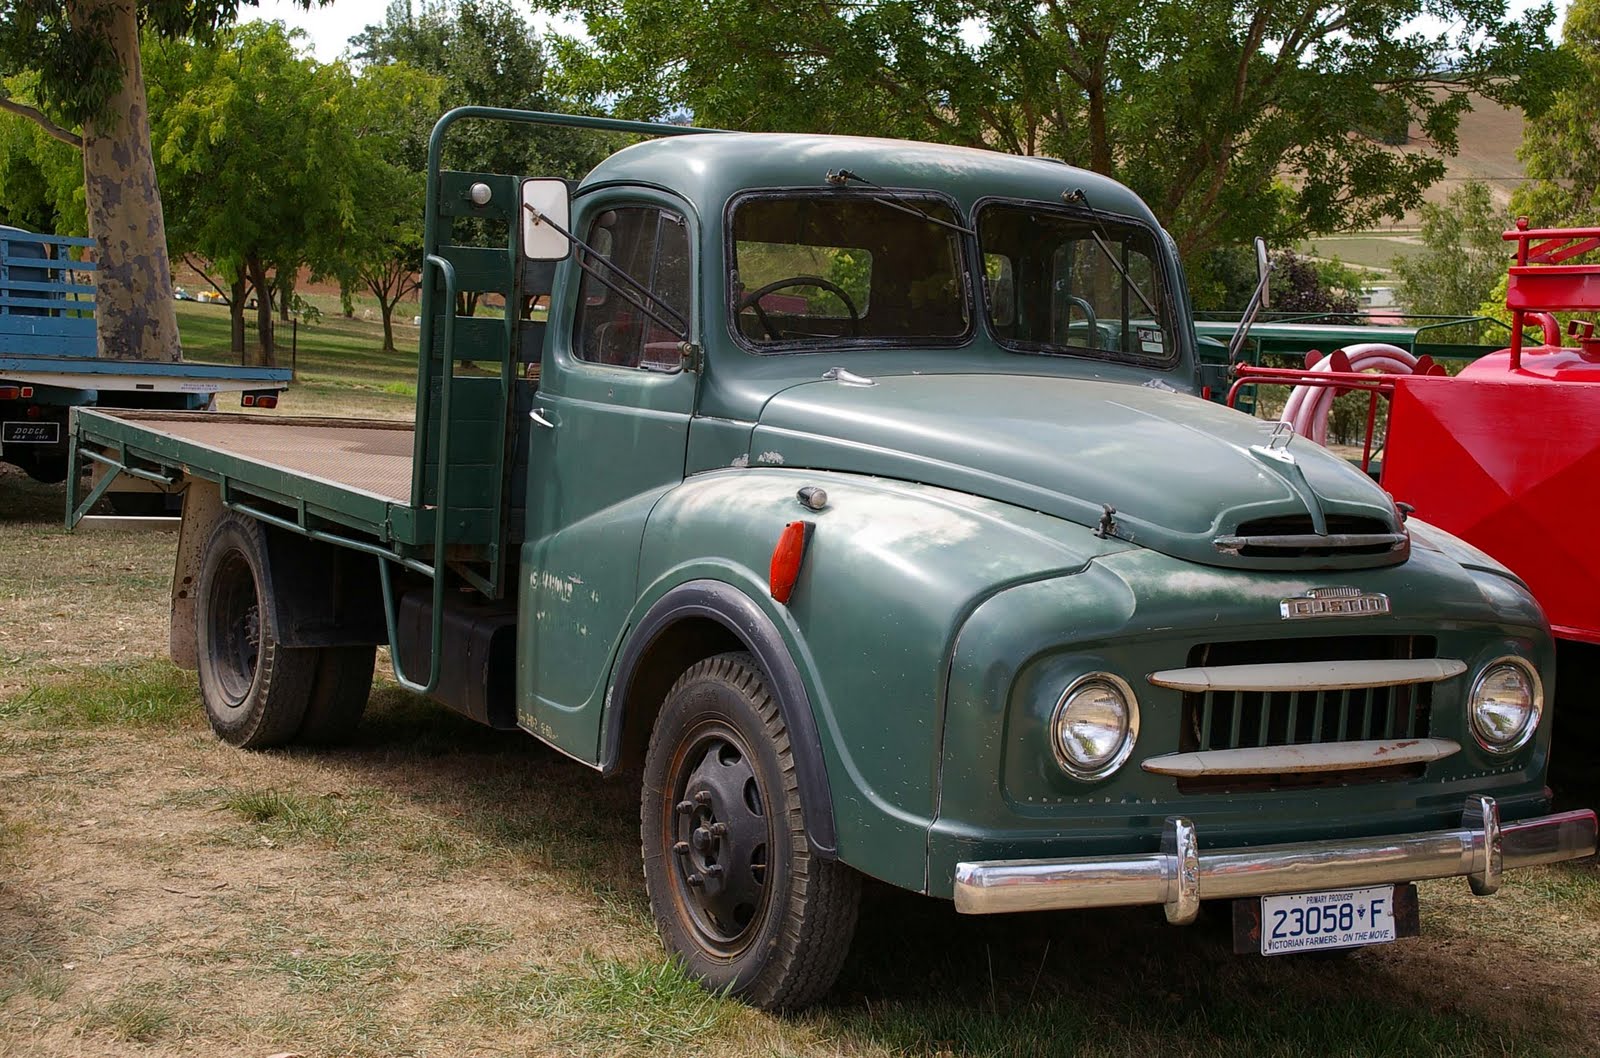 Just A Car Guy: Historic trucks blogspot comes across cool old trucks in Australia